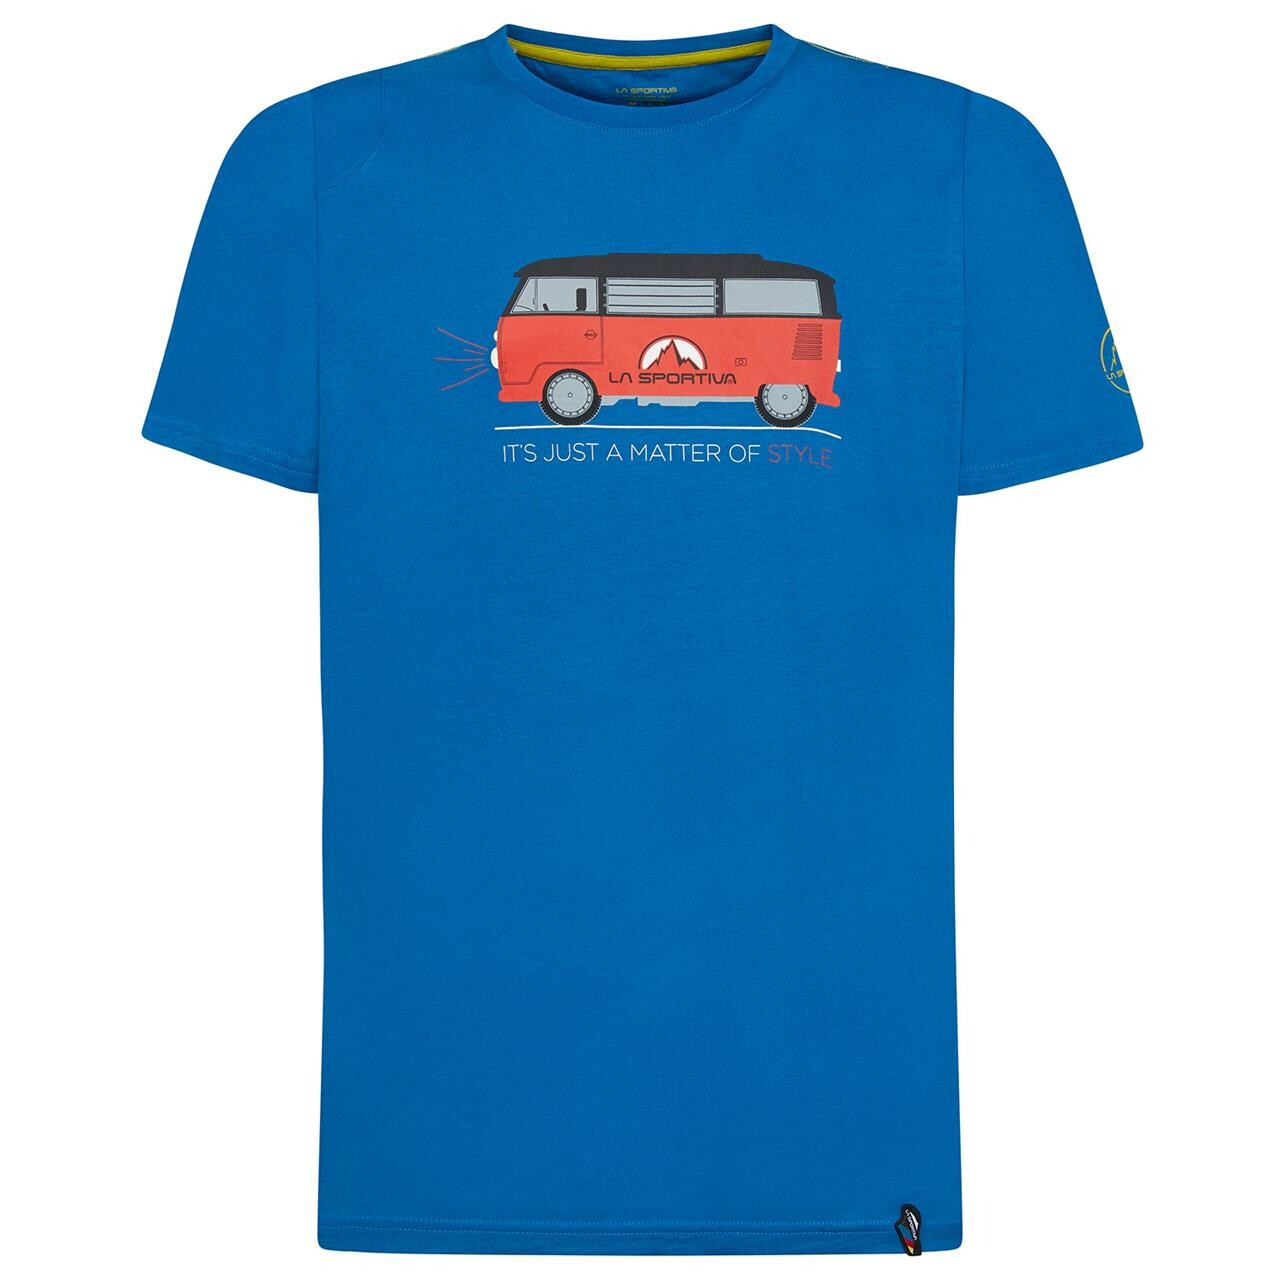 16: La Sportiva Mens Van T-shirt  (Blå (NEPTUNE) Small)